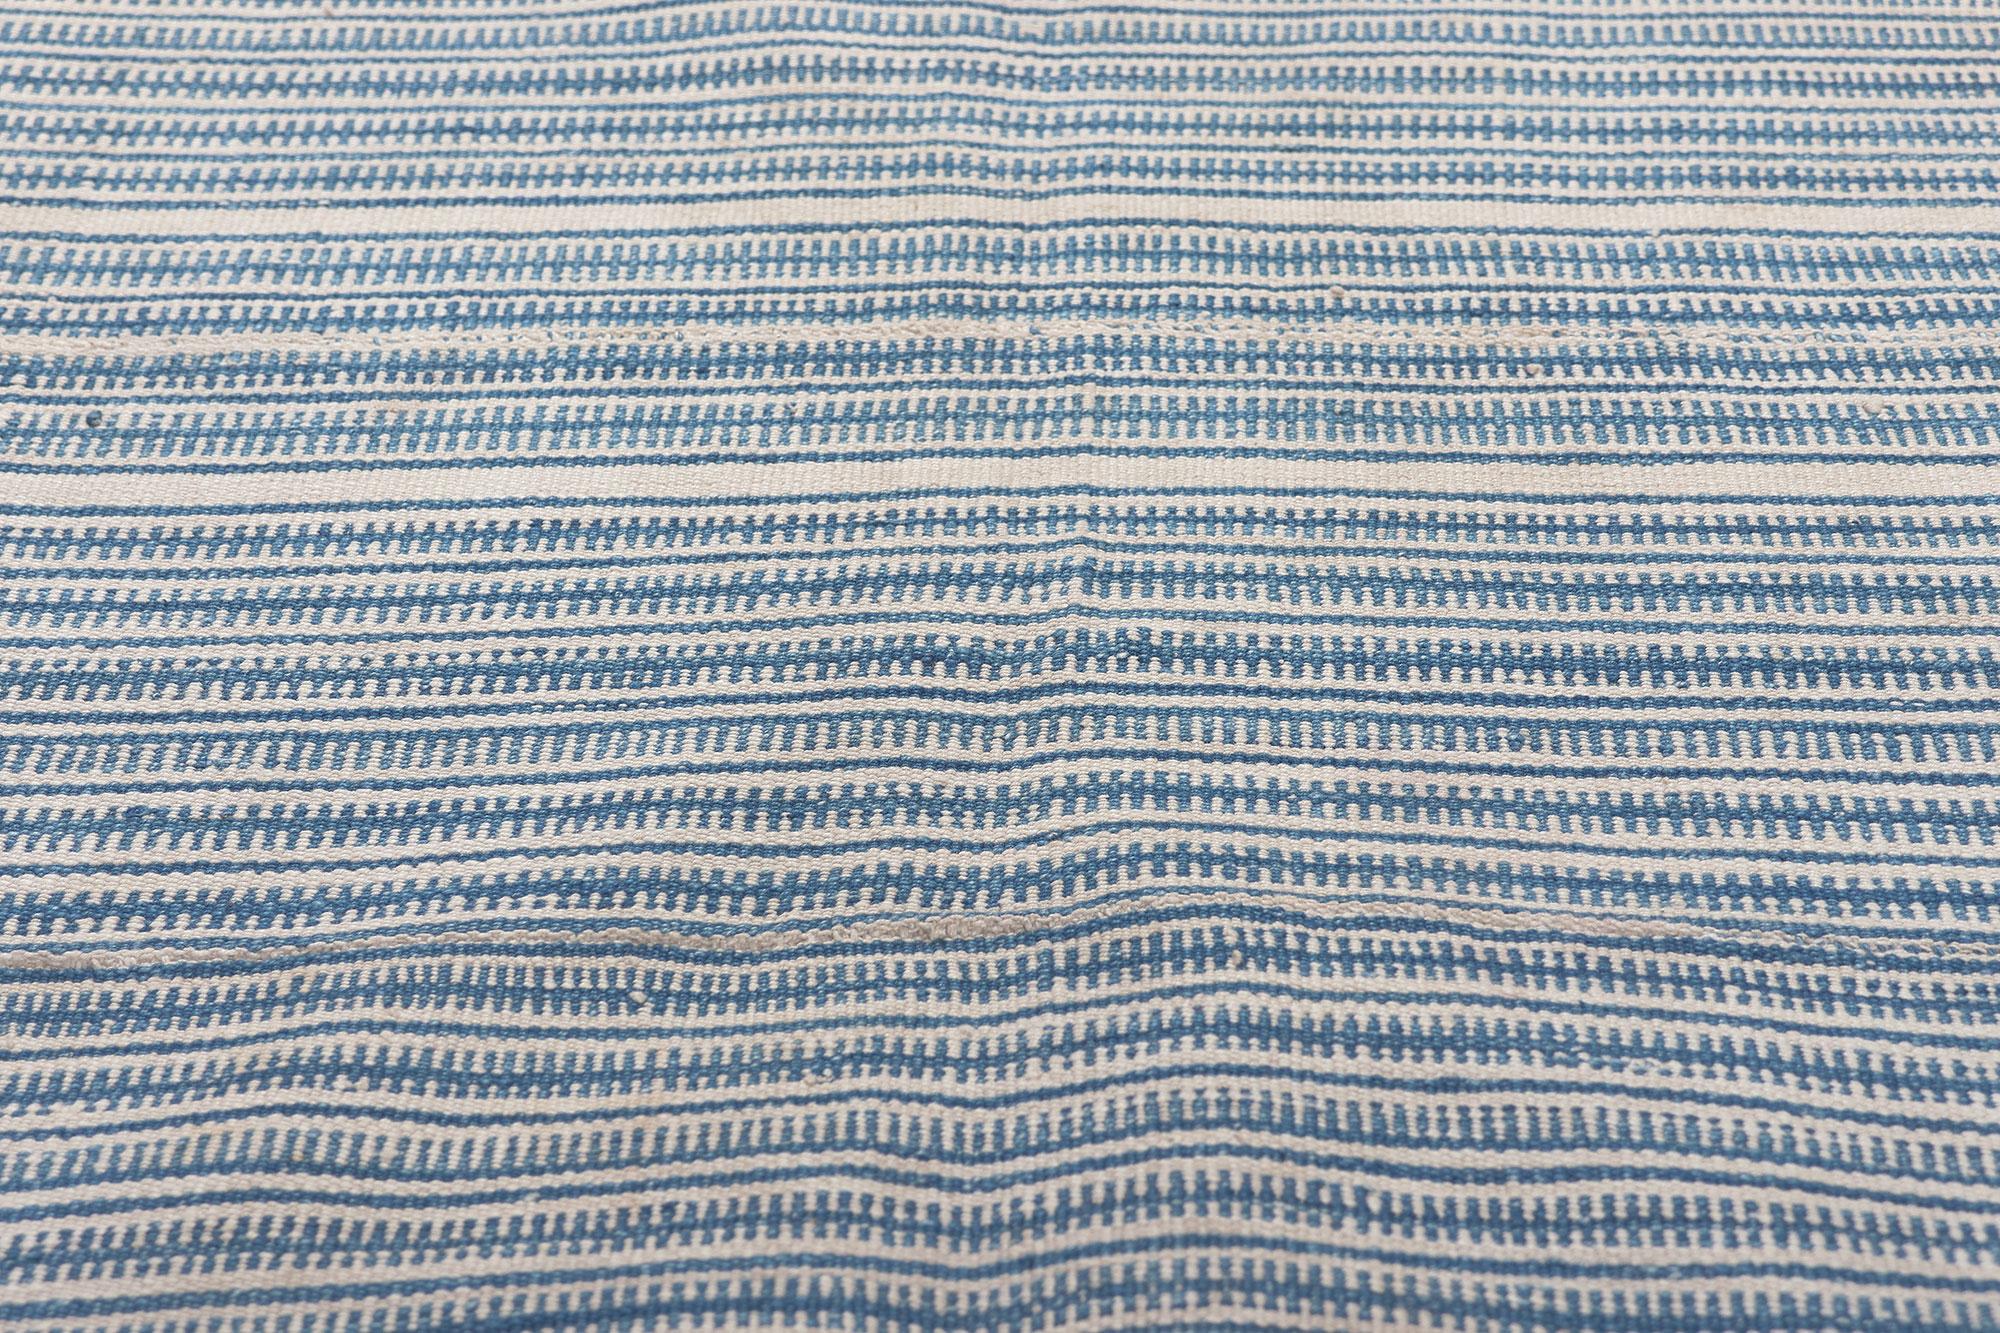 Turkish Blue and Ivory Crosshatch Stripe Kilim Rug, Casually Chic Coastal Style